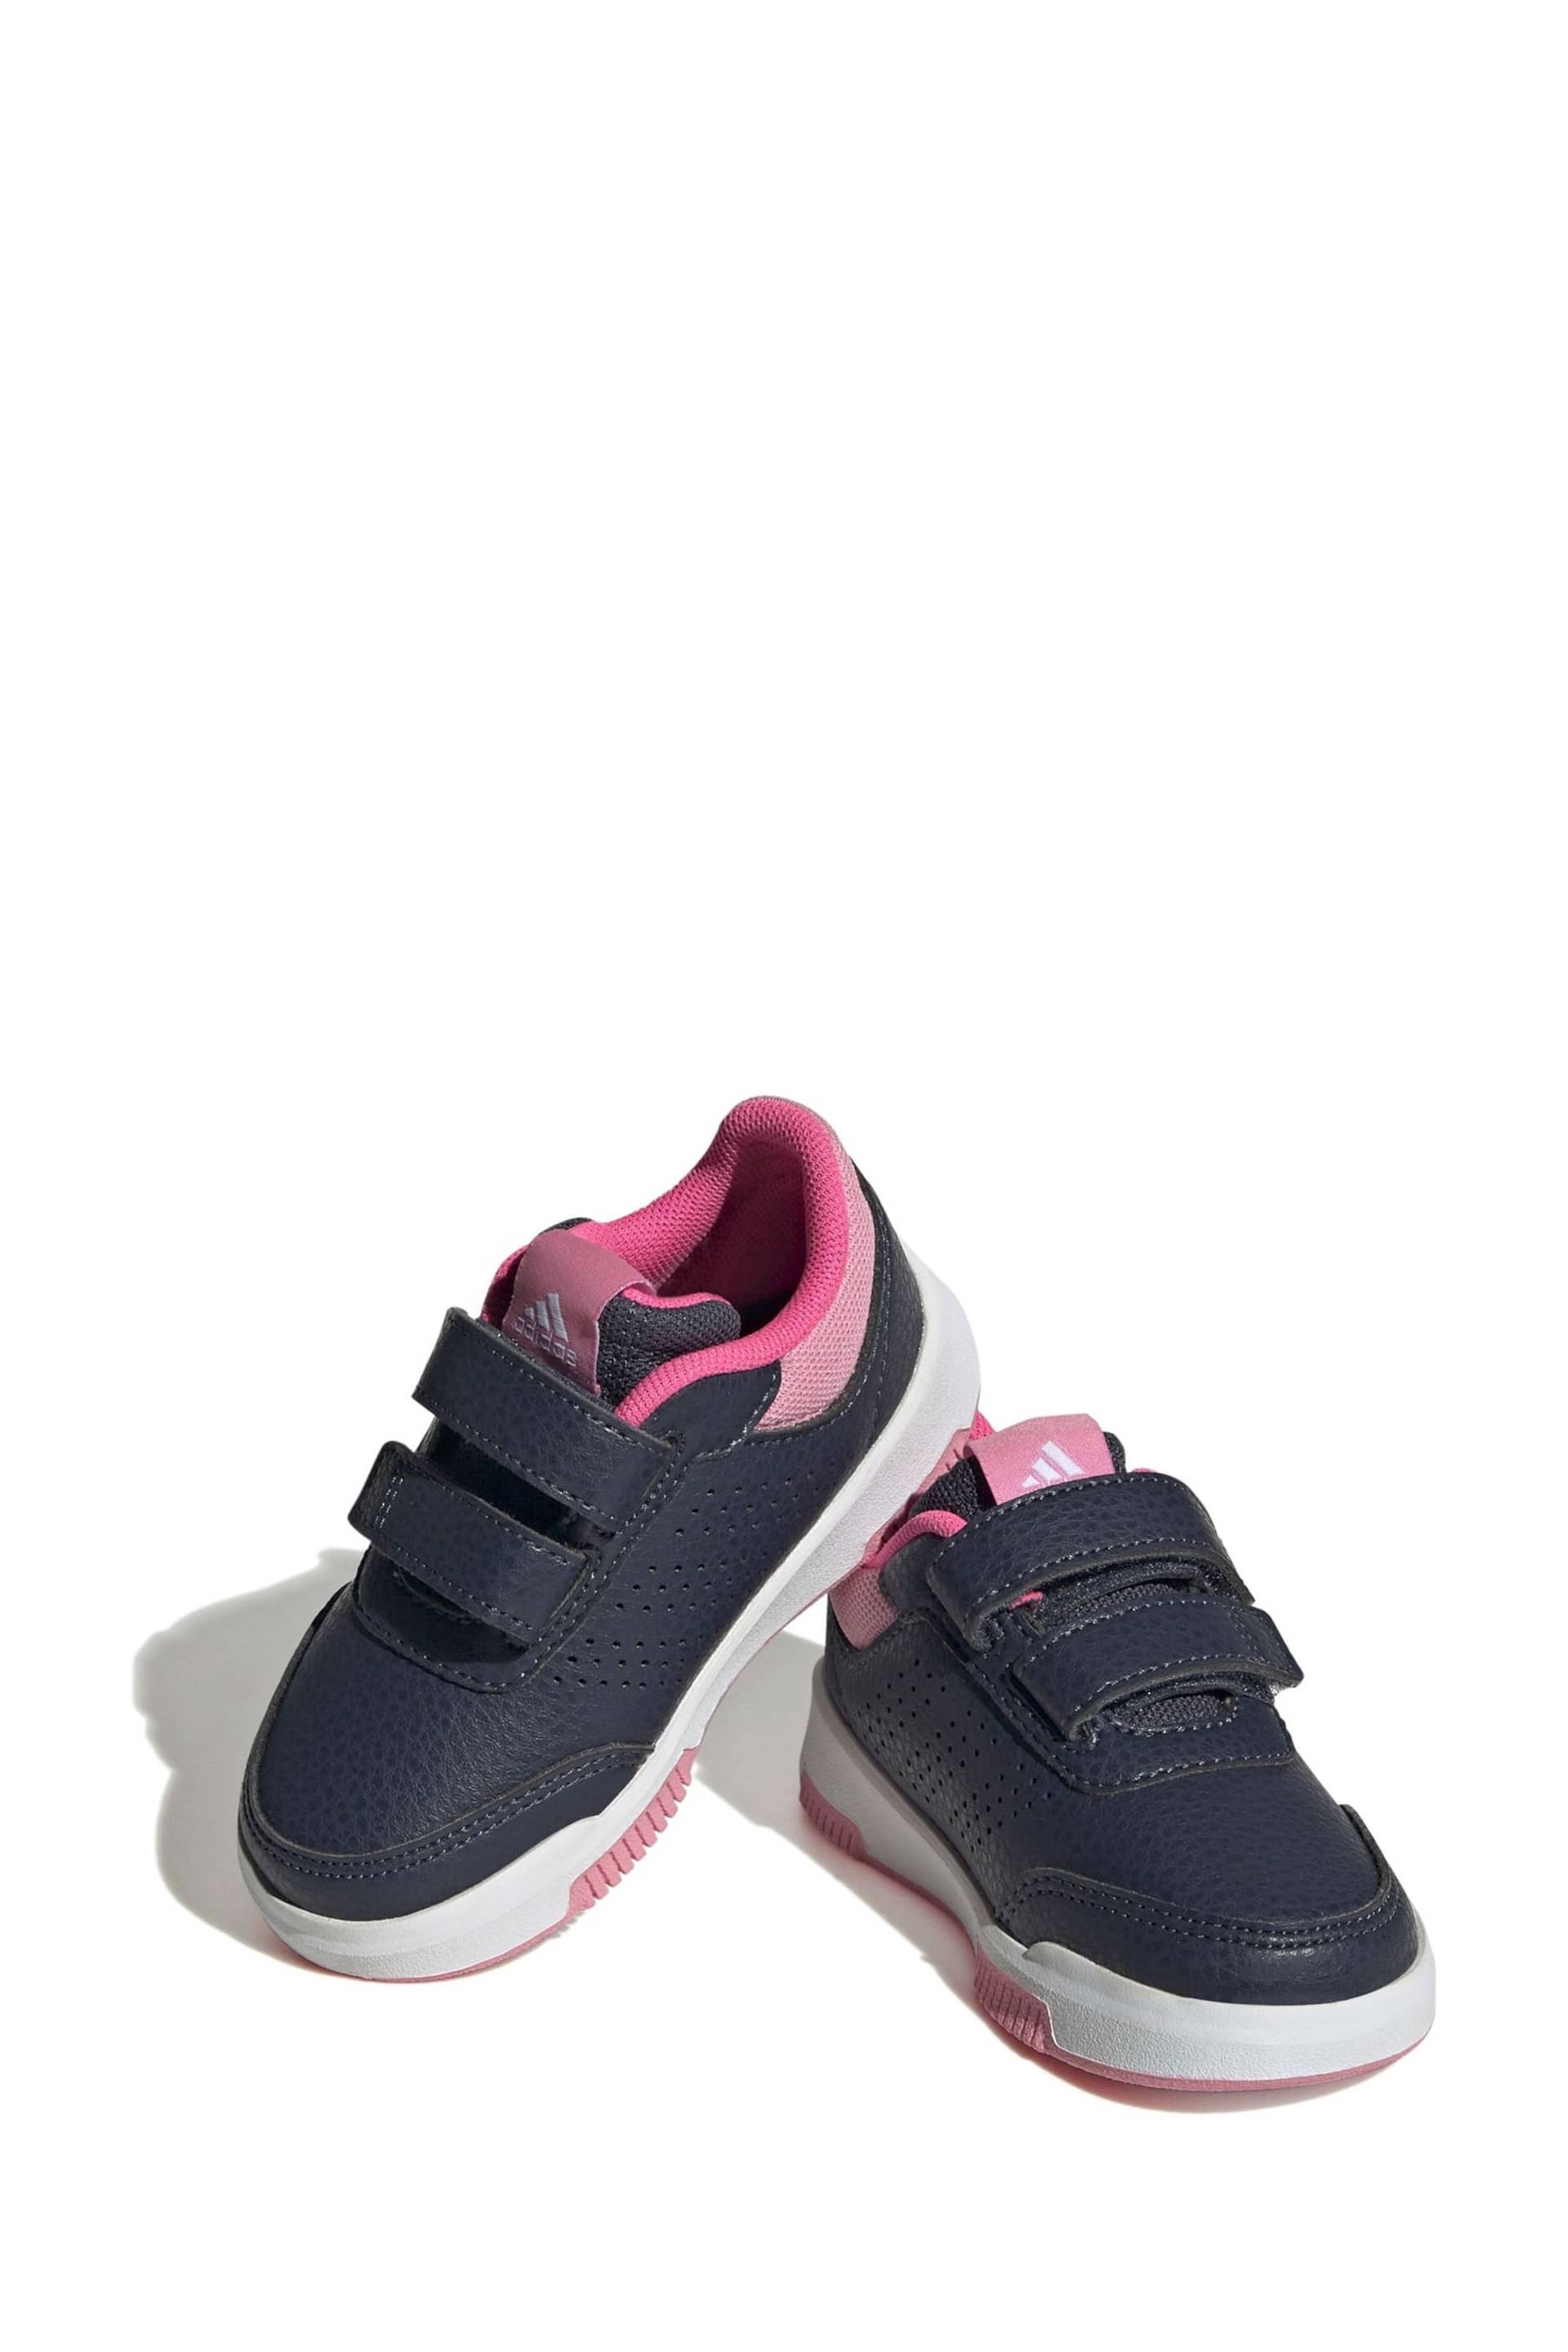 adidas Black/Pink Infant Tensaur Sport 2.0 I Trainers - Image 4 of 9